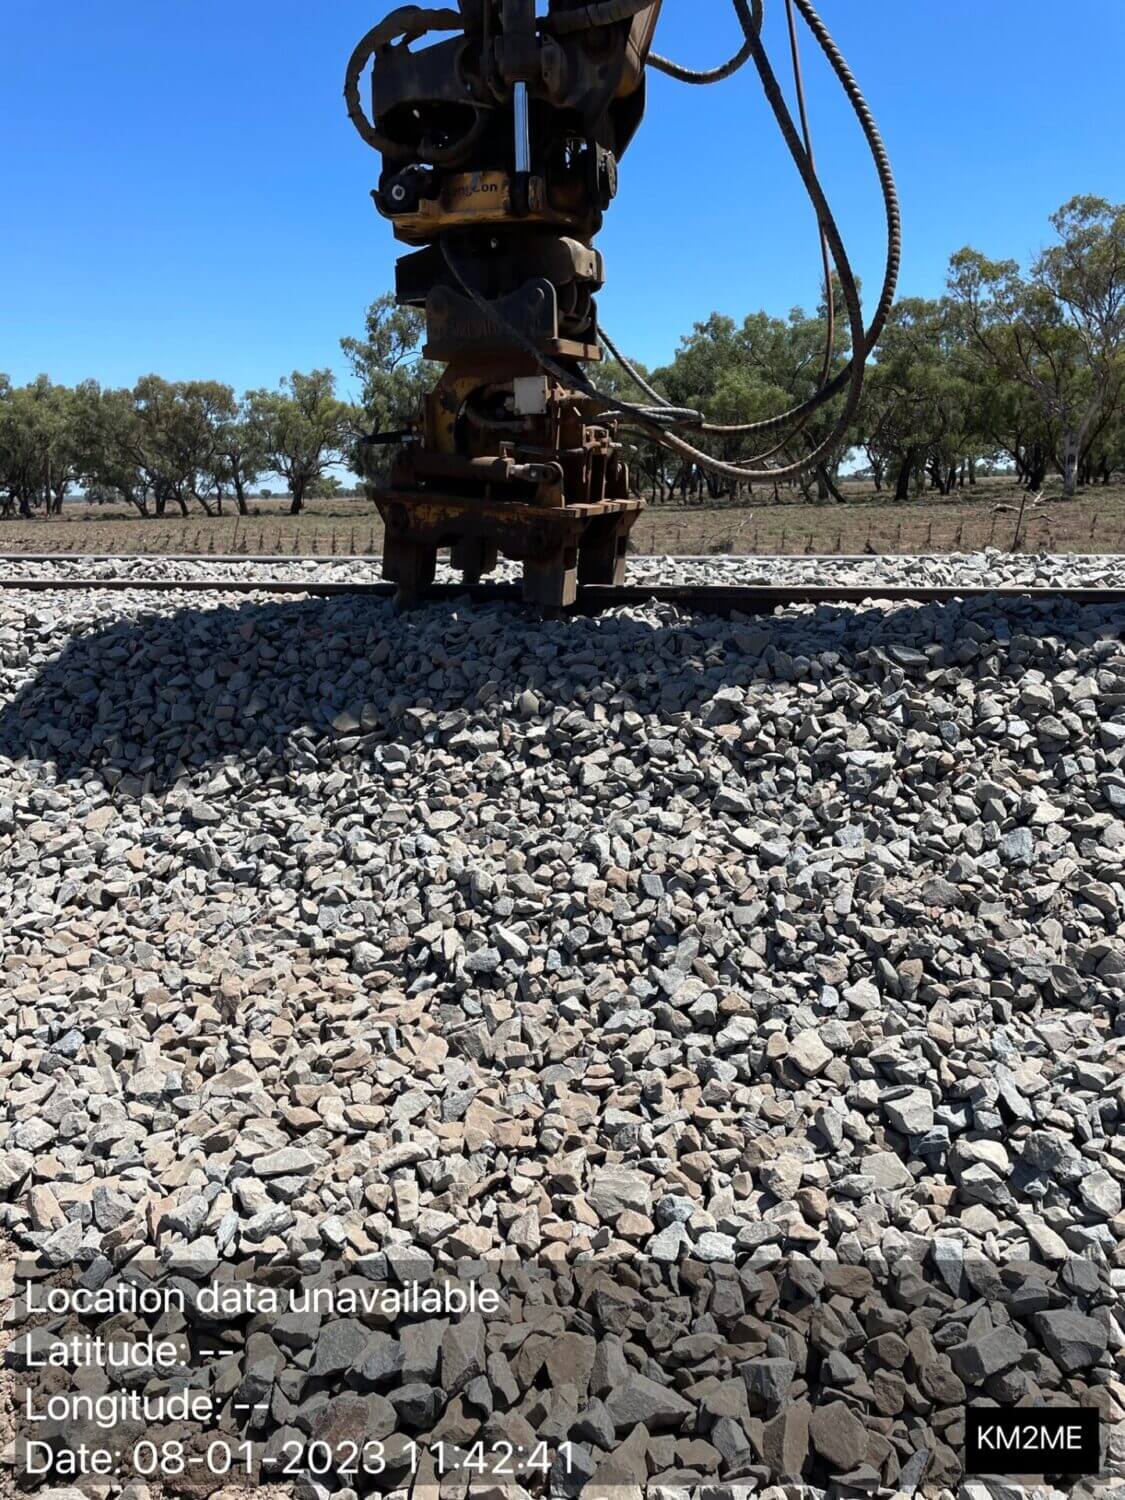 Image Credits: the Australian Rail Track Corporation (ARTC).